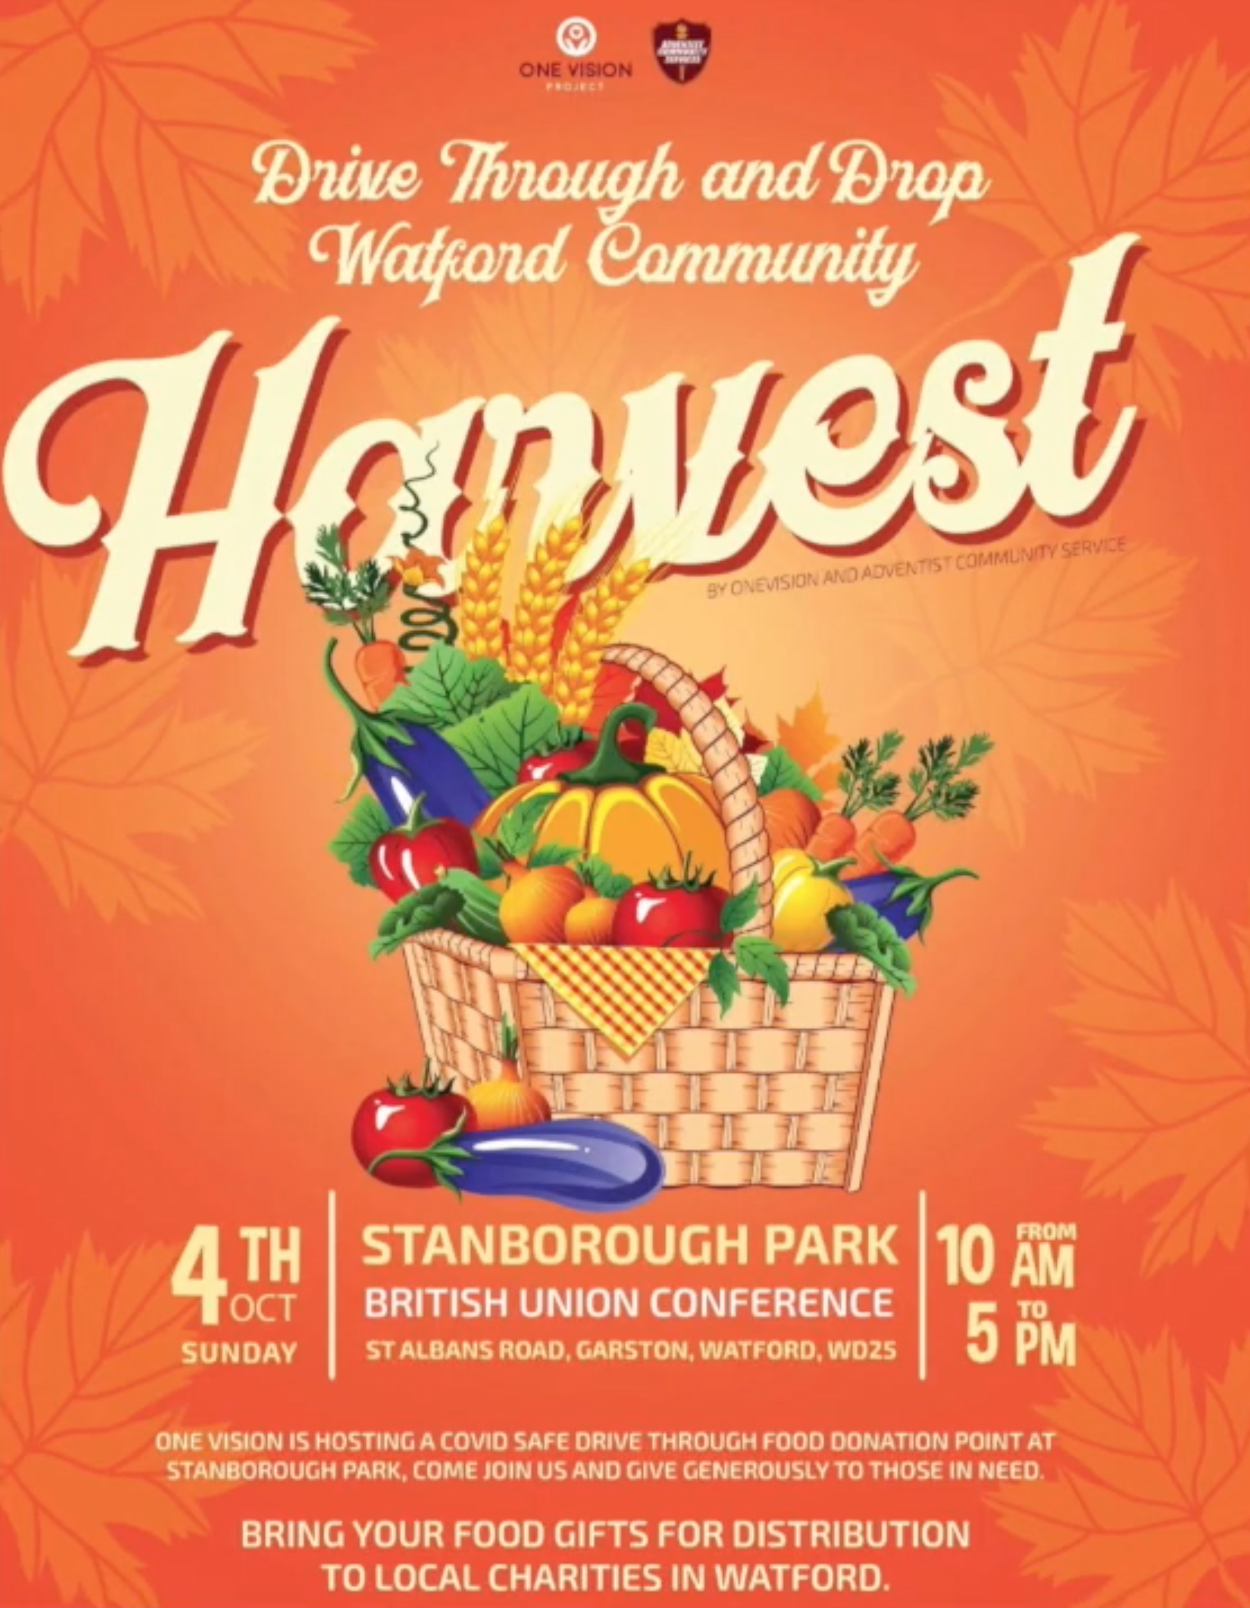 Watford Community Harvest Drive Through & Drop